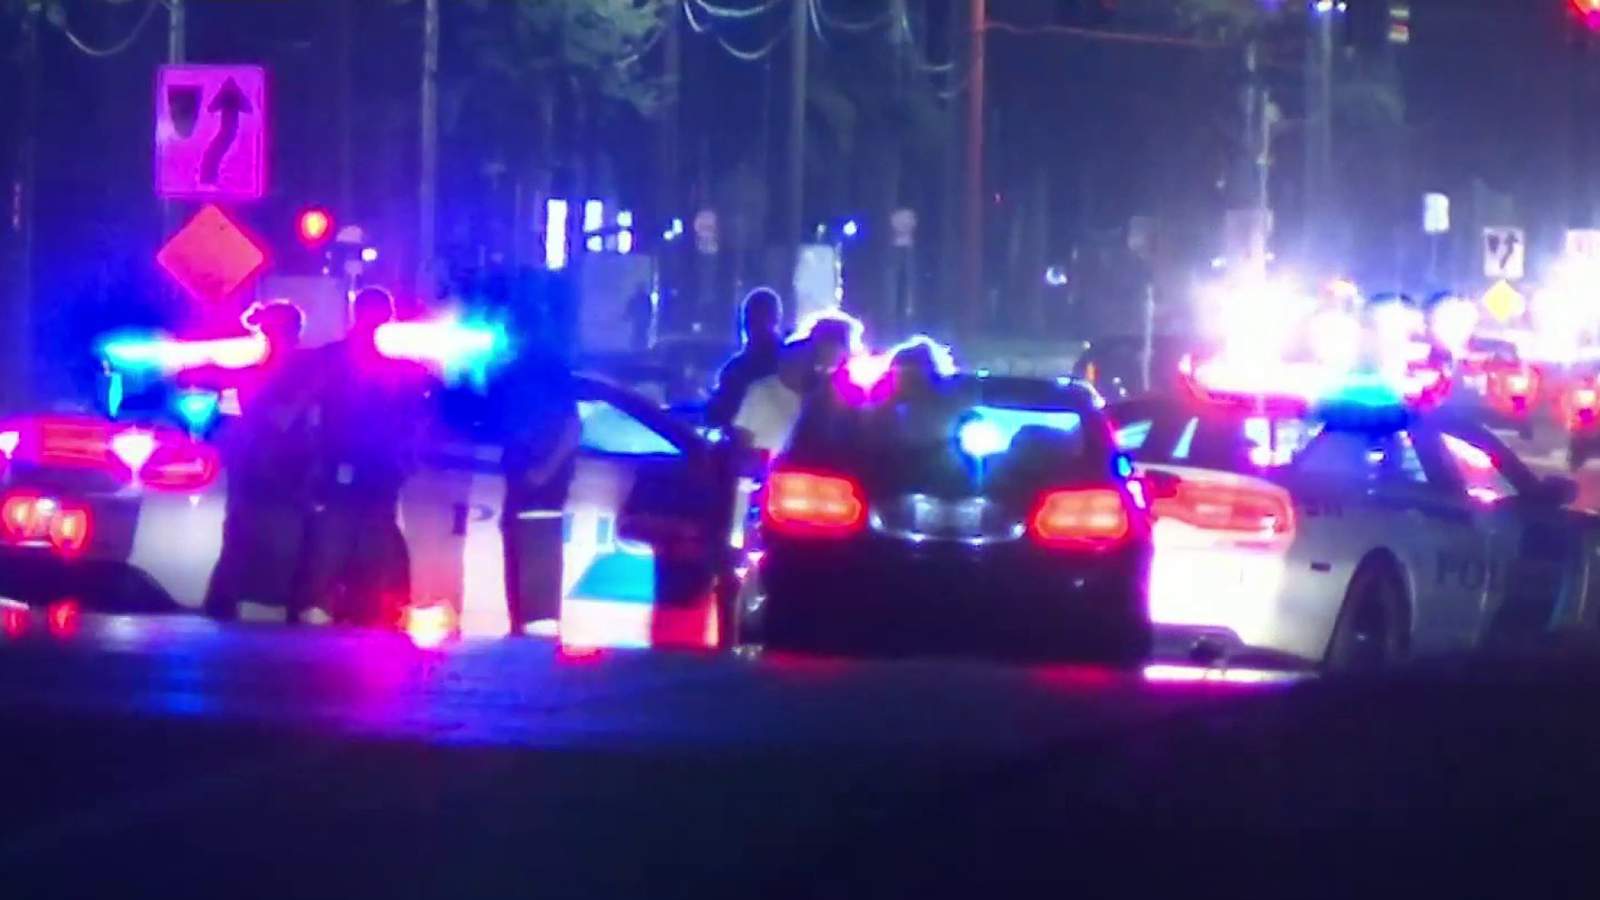 Pedestrian killed in hit-and-run near Orlando country club